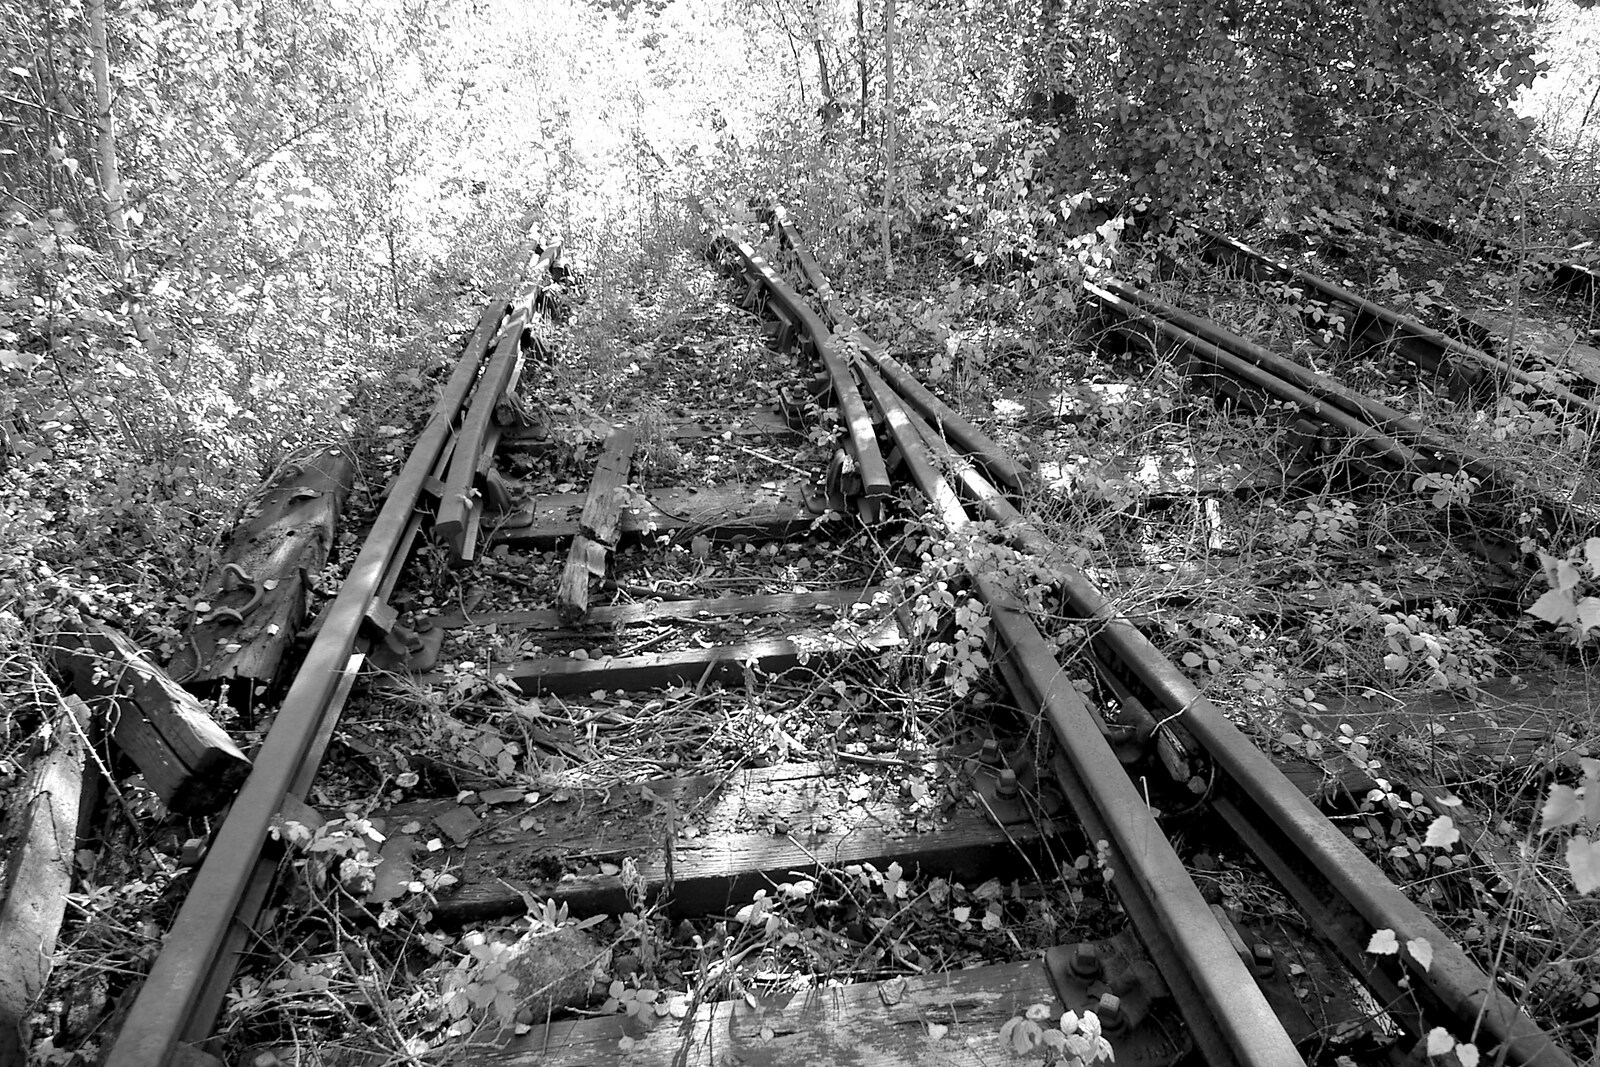 Crossing tracks from Disused Cambridge Railway, Milton Road, Cambridge - 28th October 2005